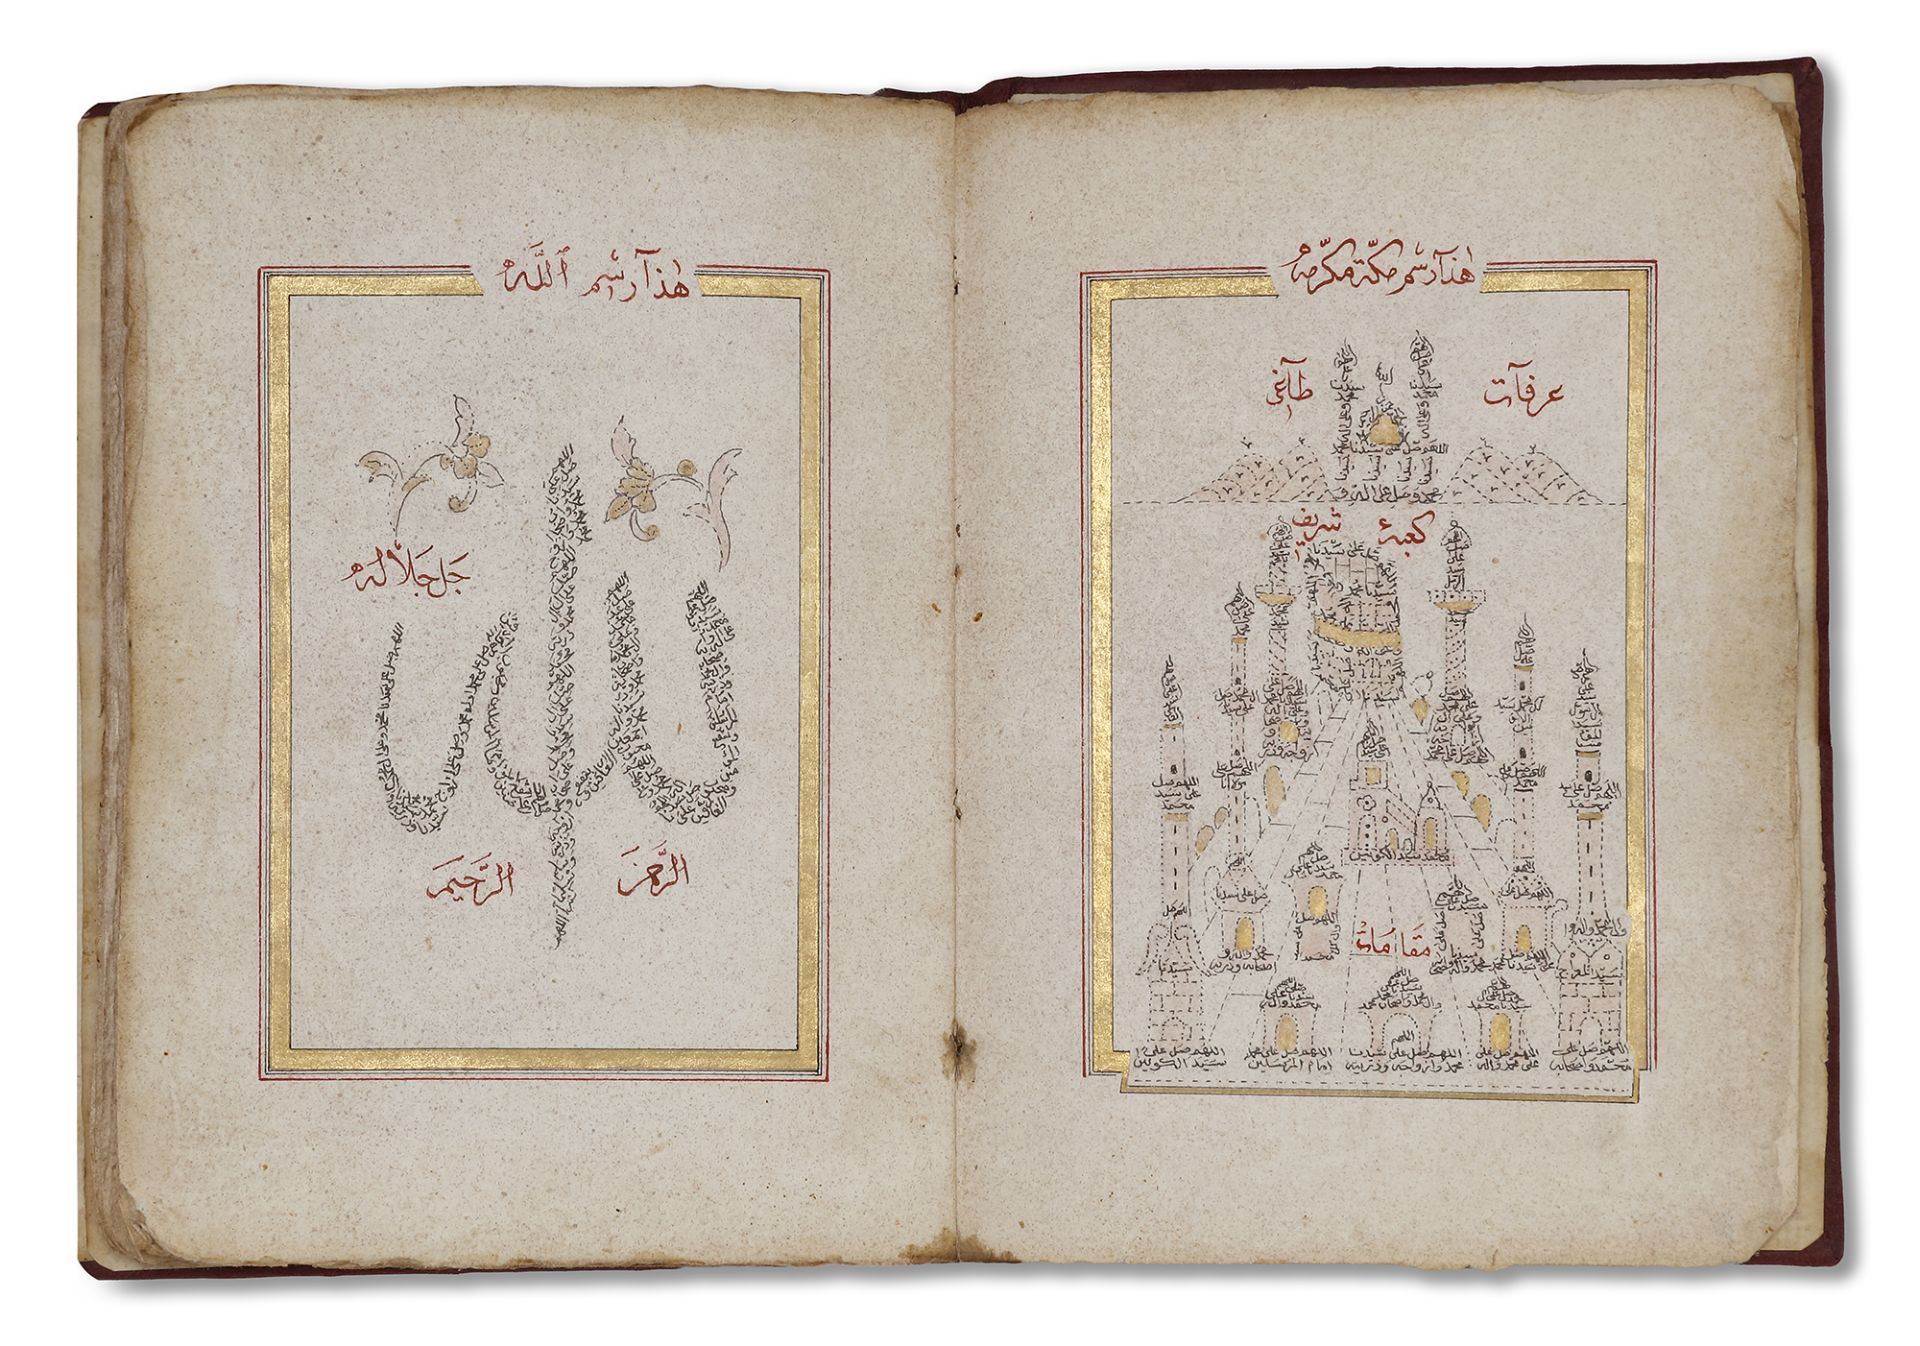 AN OTTOMAN COMPILATION OF PRAYERS AND HOLY PLACES BY ABD AL-QADIR HUSRI, OTTOMAN TURKEY, DATED 1181